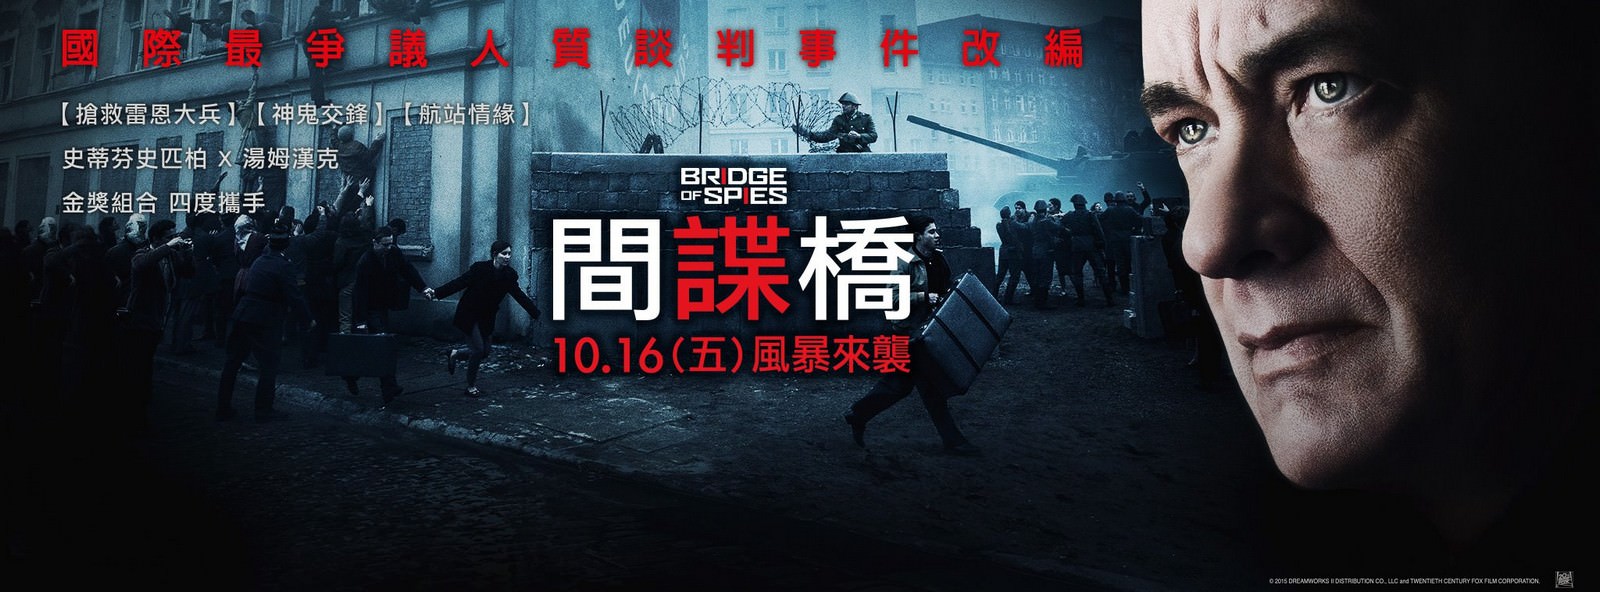 Movie, Bridge of Spies(美國, 2015年) / 間諜橋(台灣) / 间谍之桥(中國) / 換諜者(香港), 電影海報, 台灣, 橫版